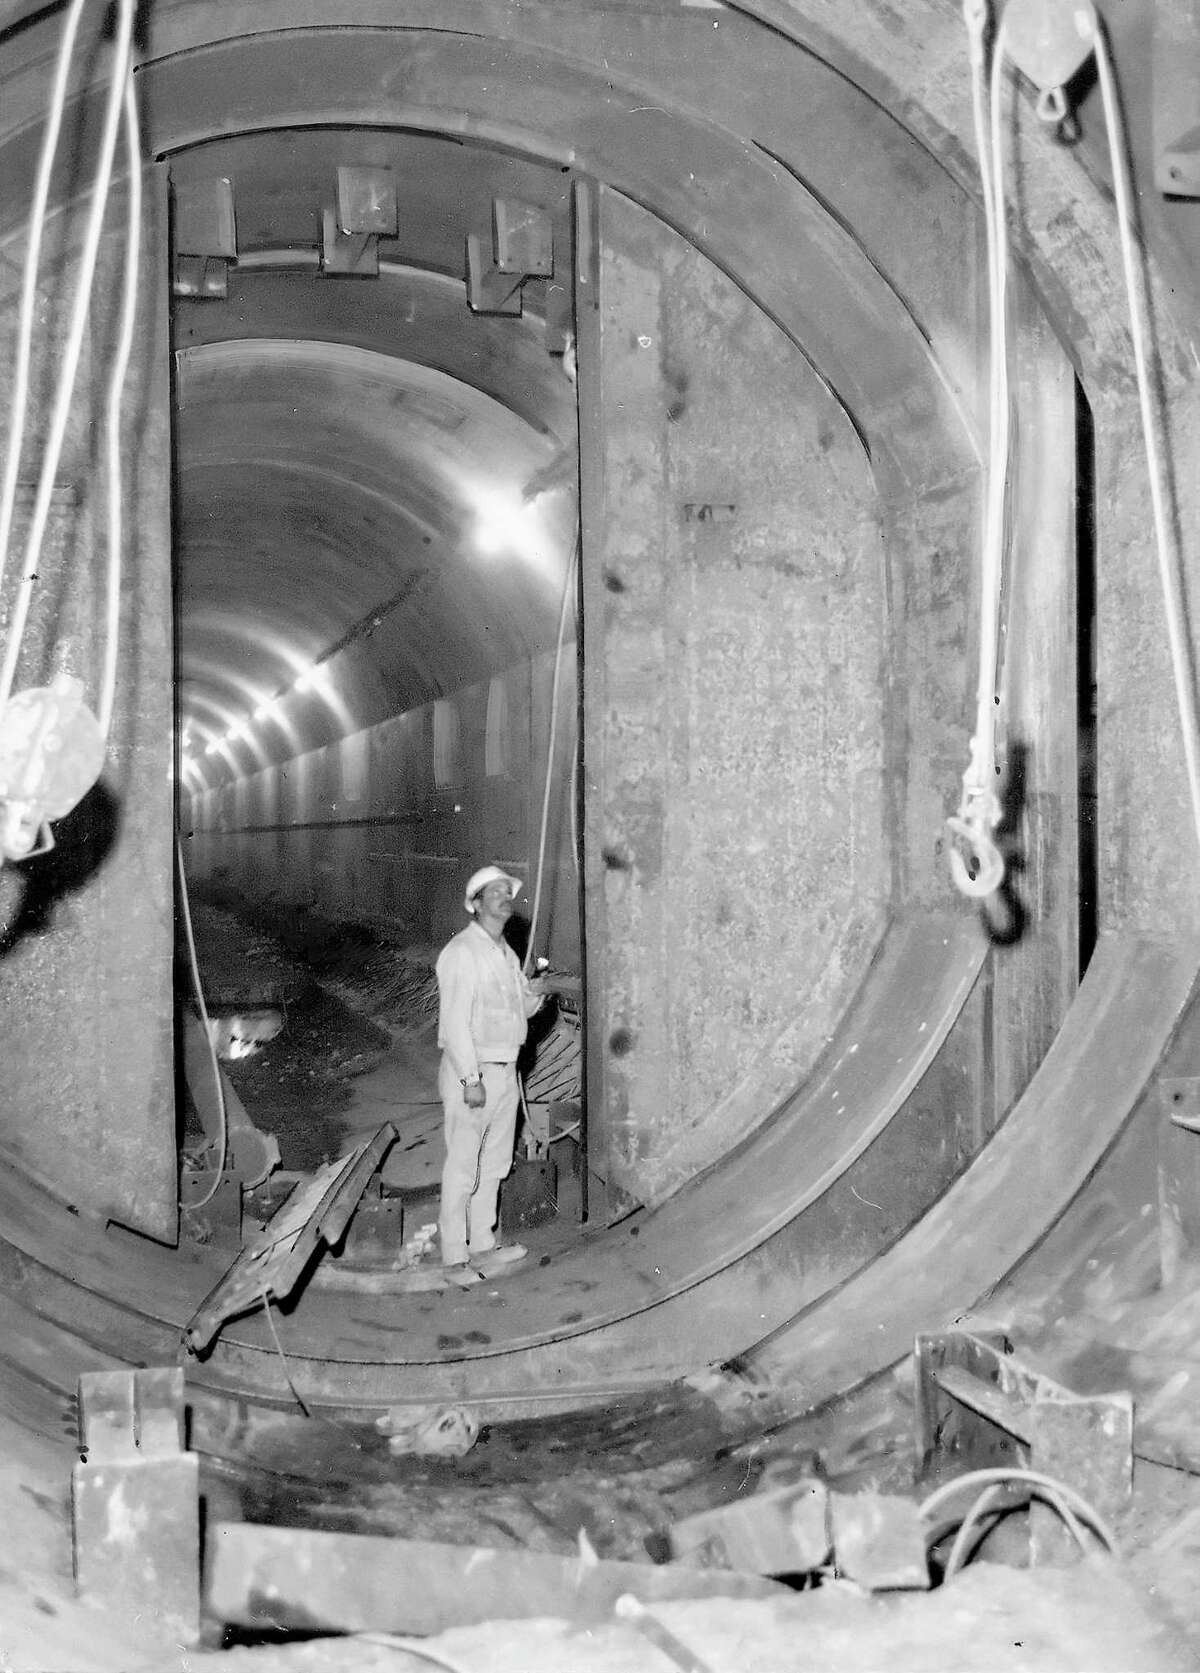 Aug. 3, 1967: BART inspector Donald Hughes surveys progress on the Transbay Tube that linked Oakland to San Francisco.